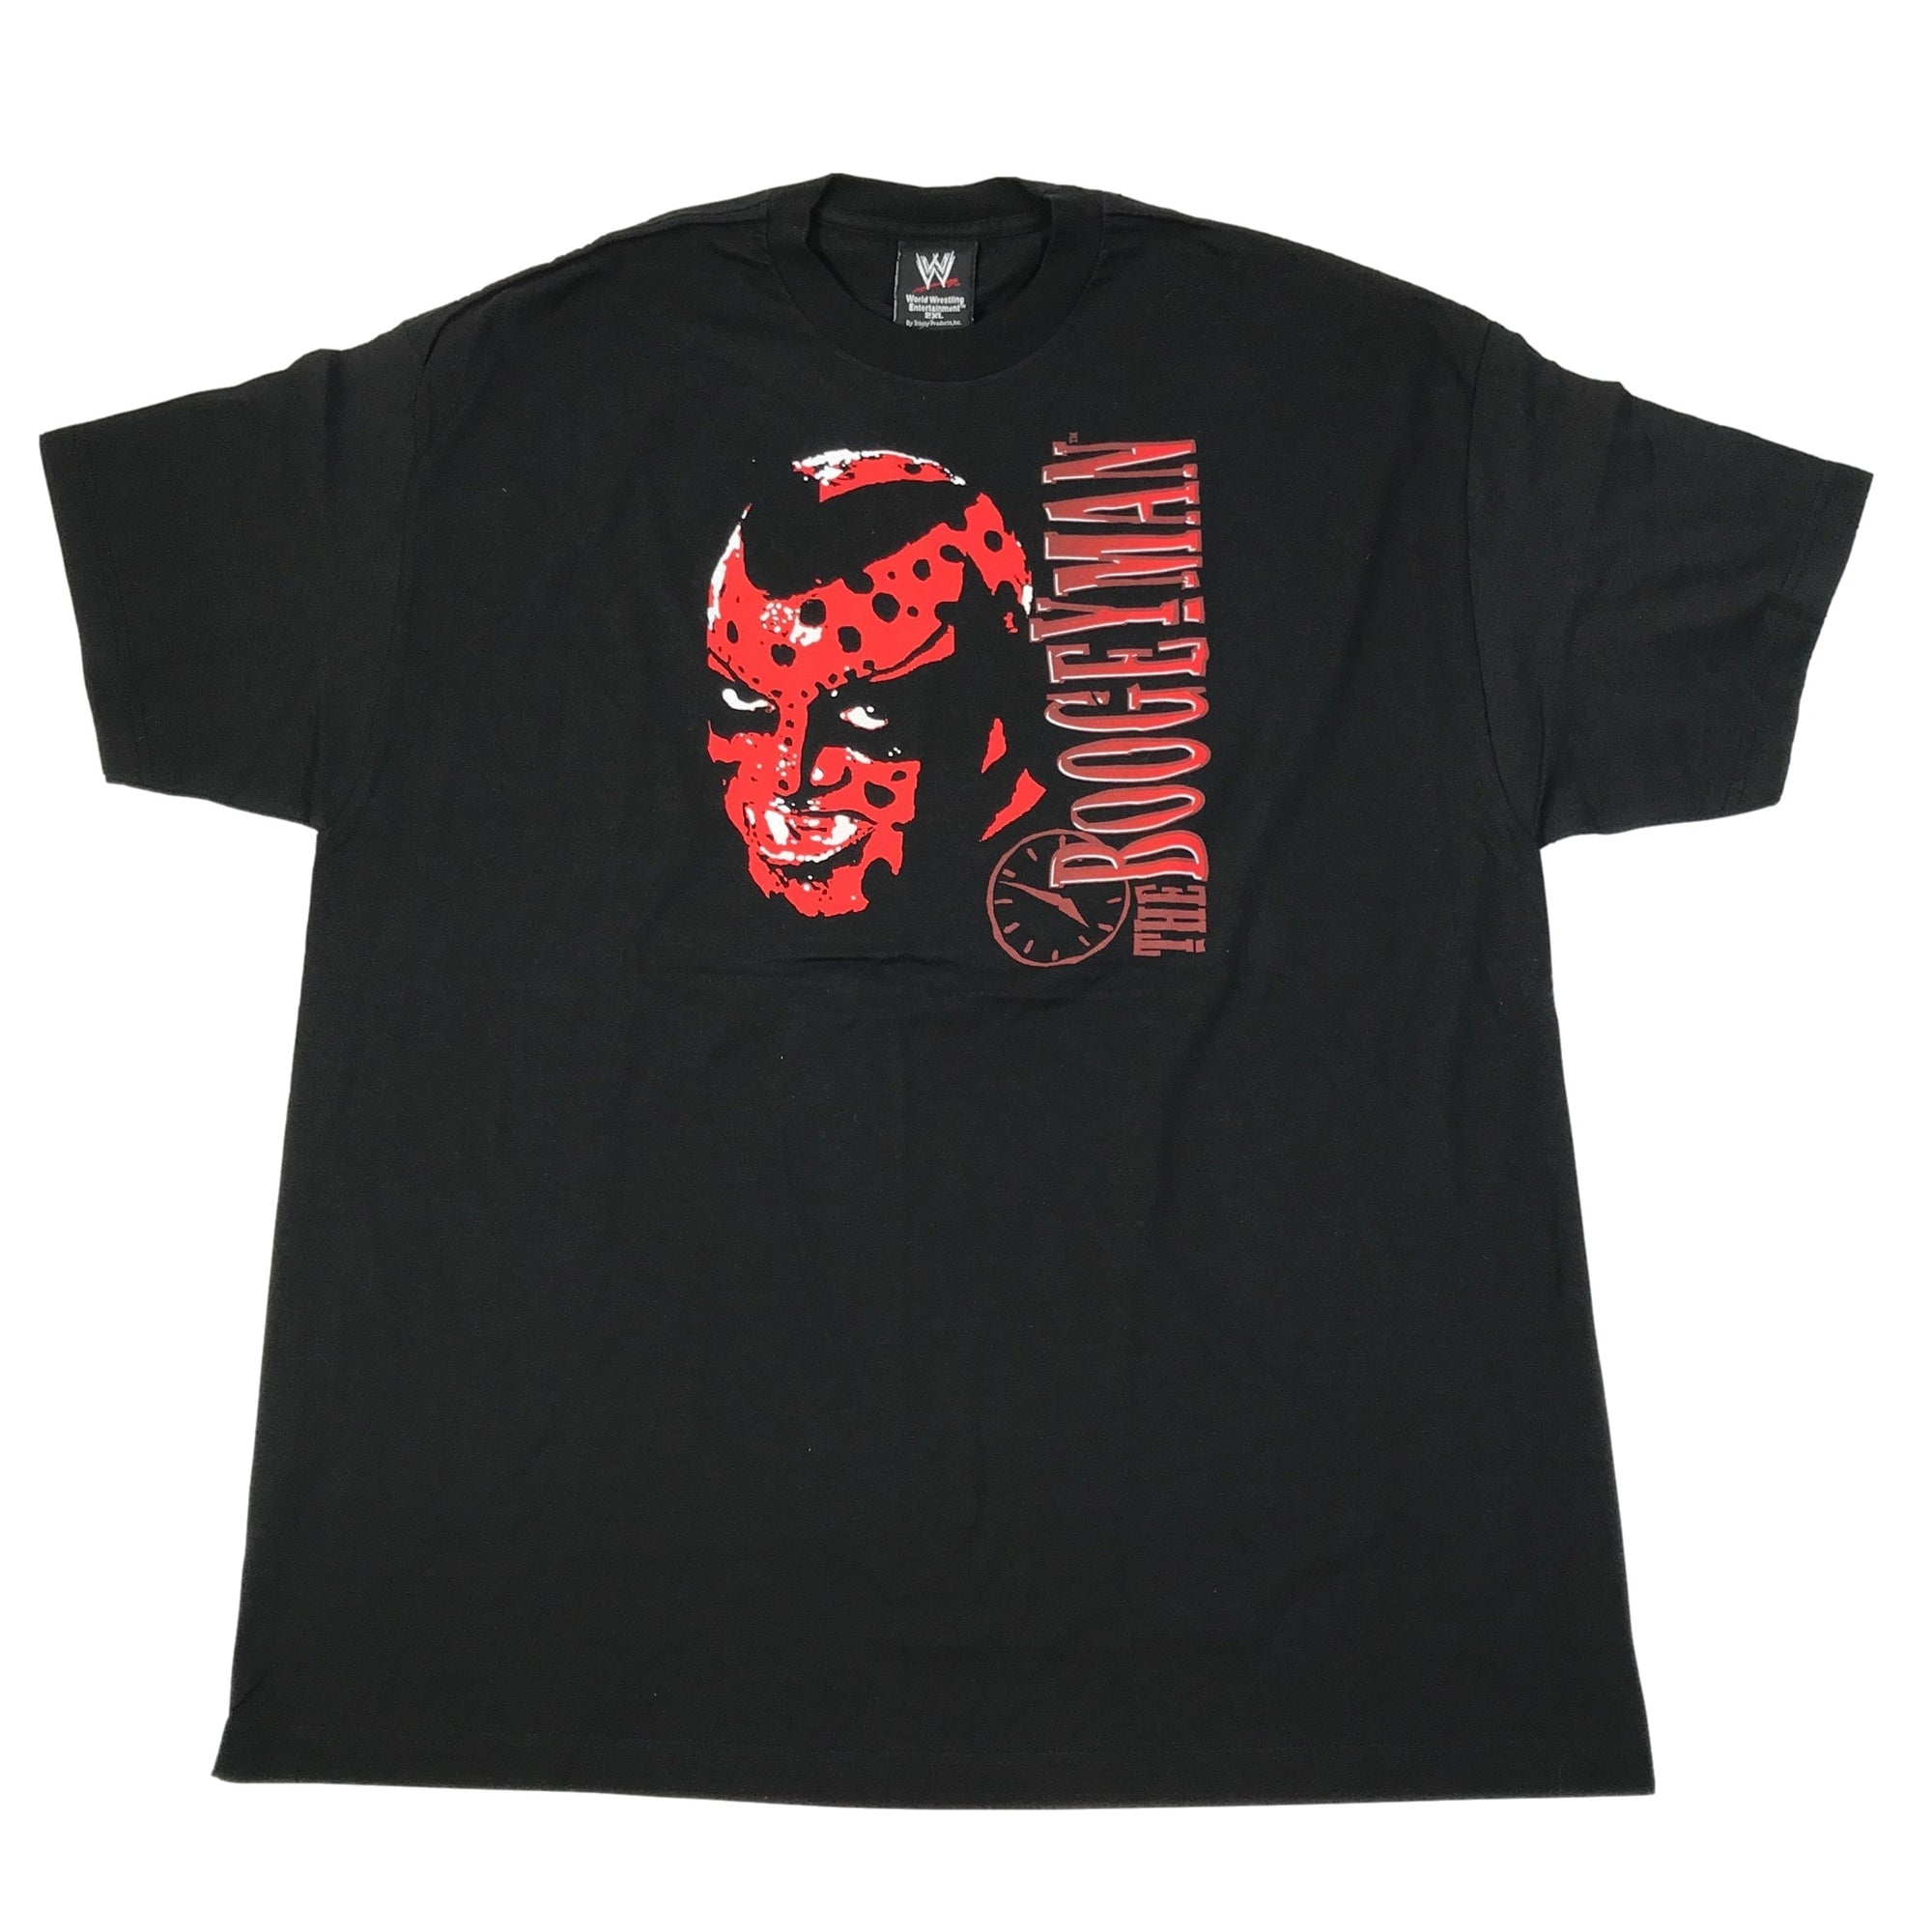 Vintage The Boogeyman "WWE" T-Shirt - jointcustodydc